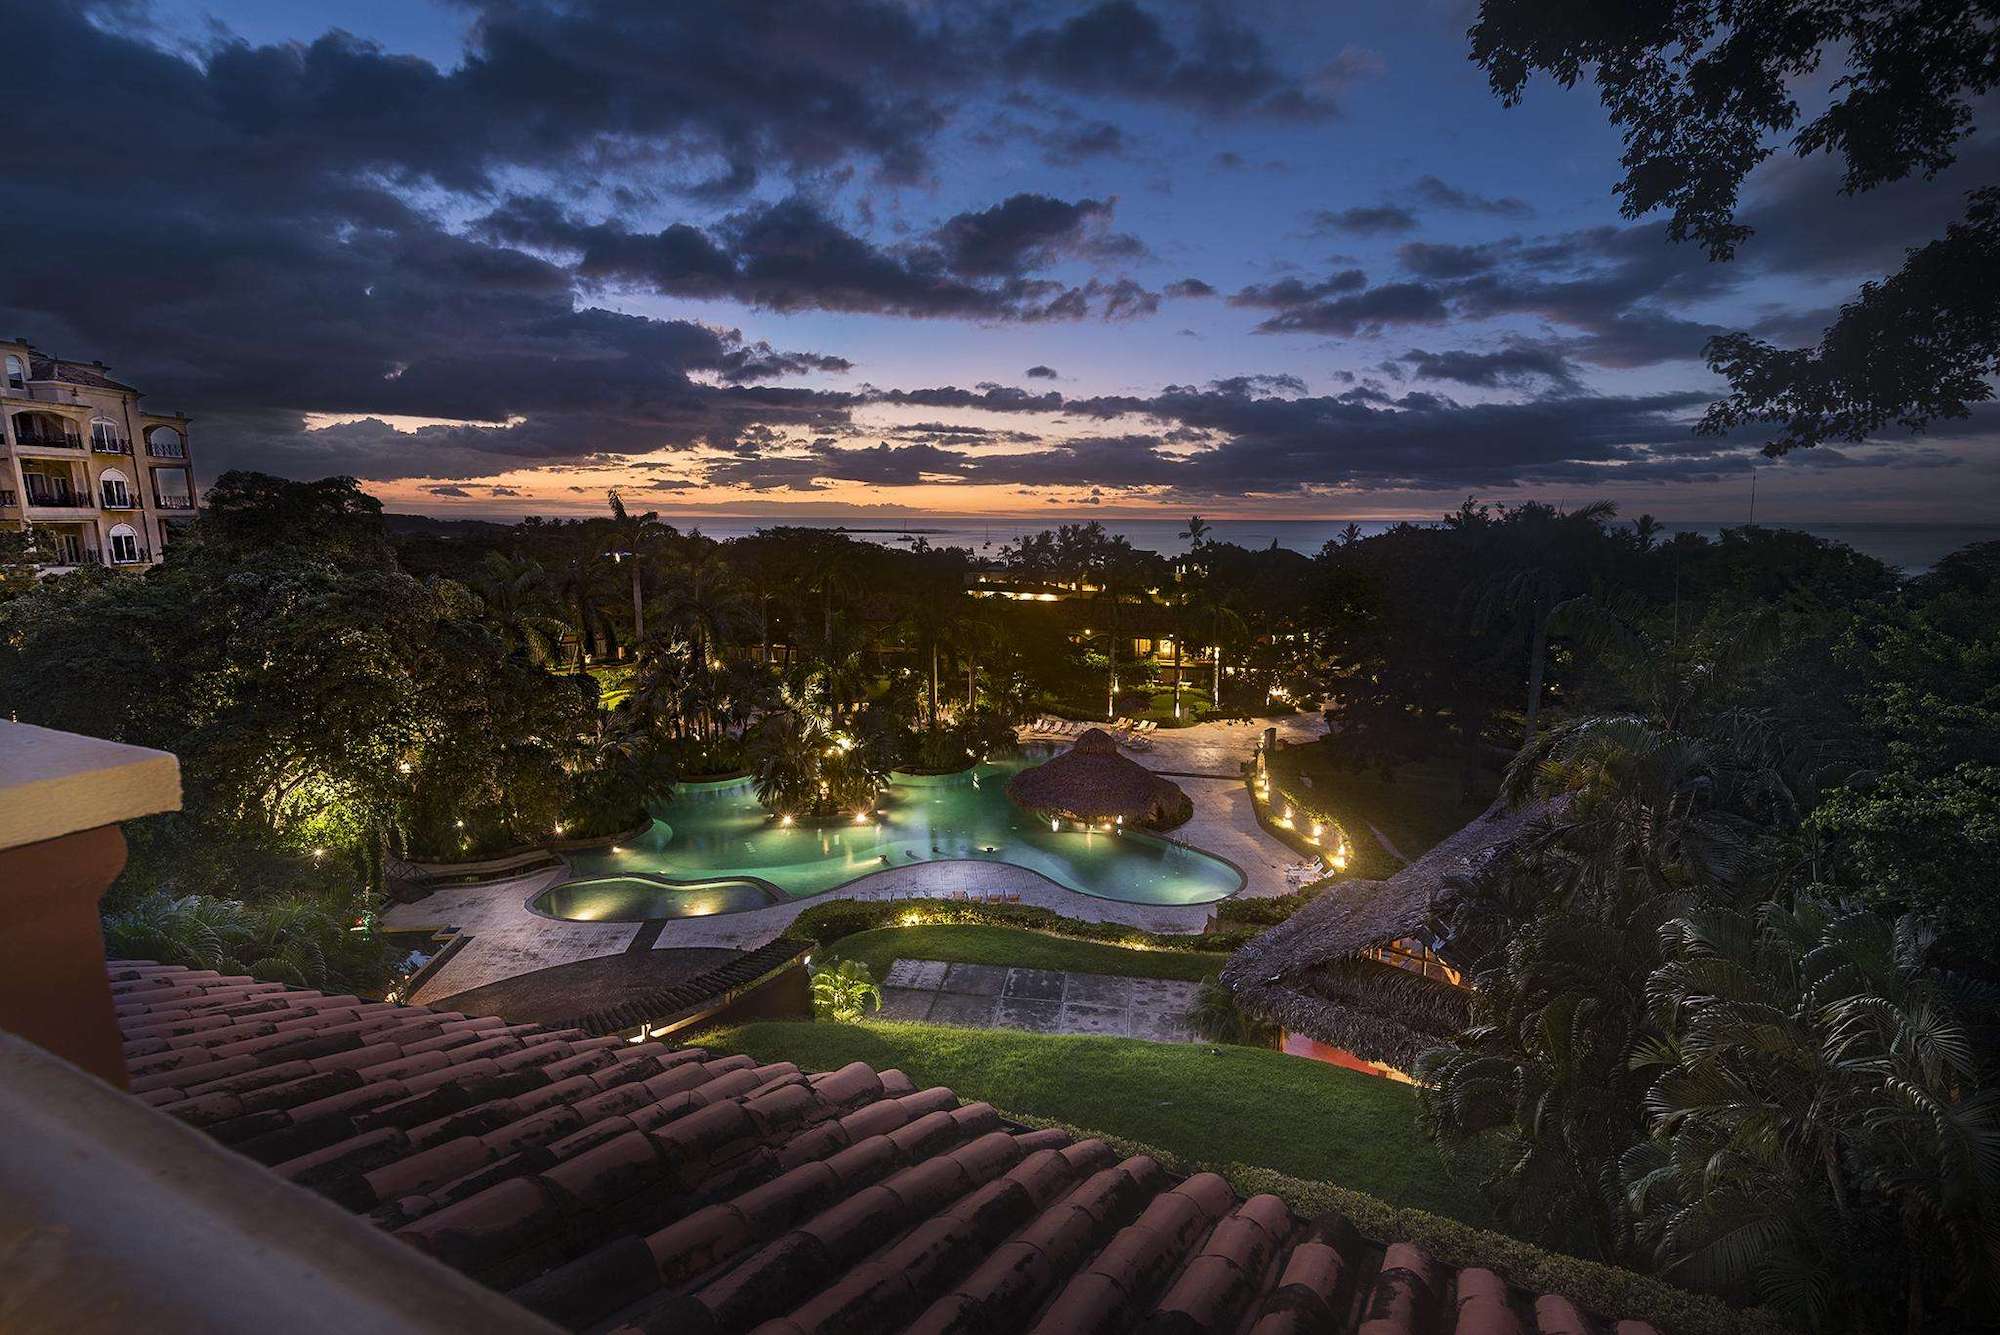 Tamarindo El Diria resort at sunset